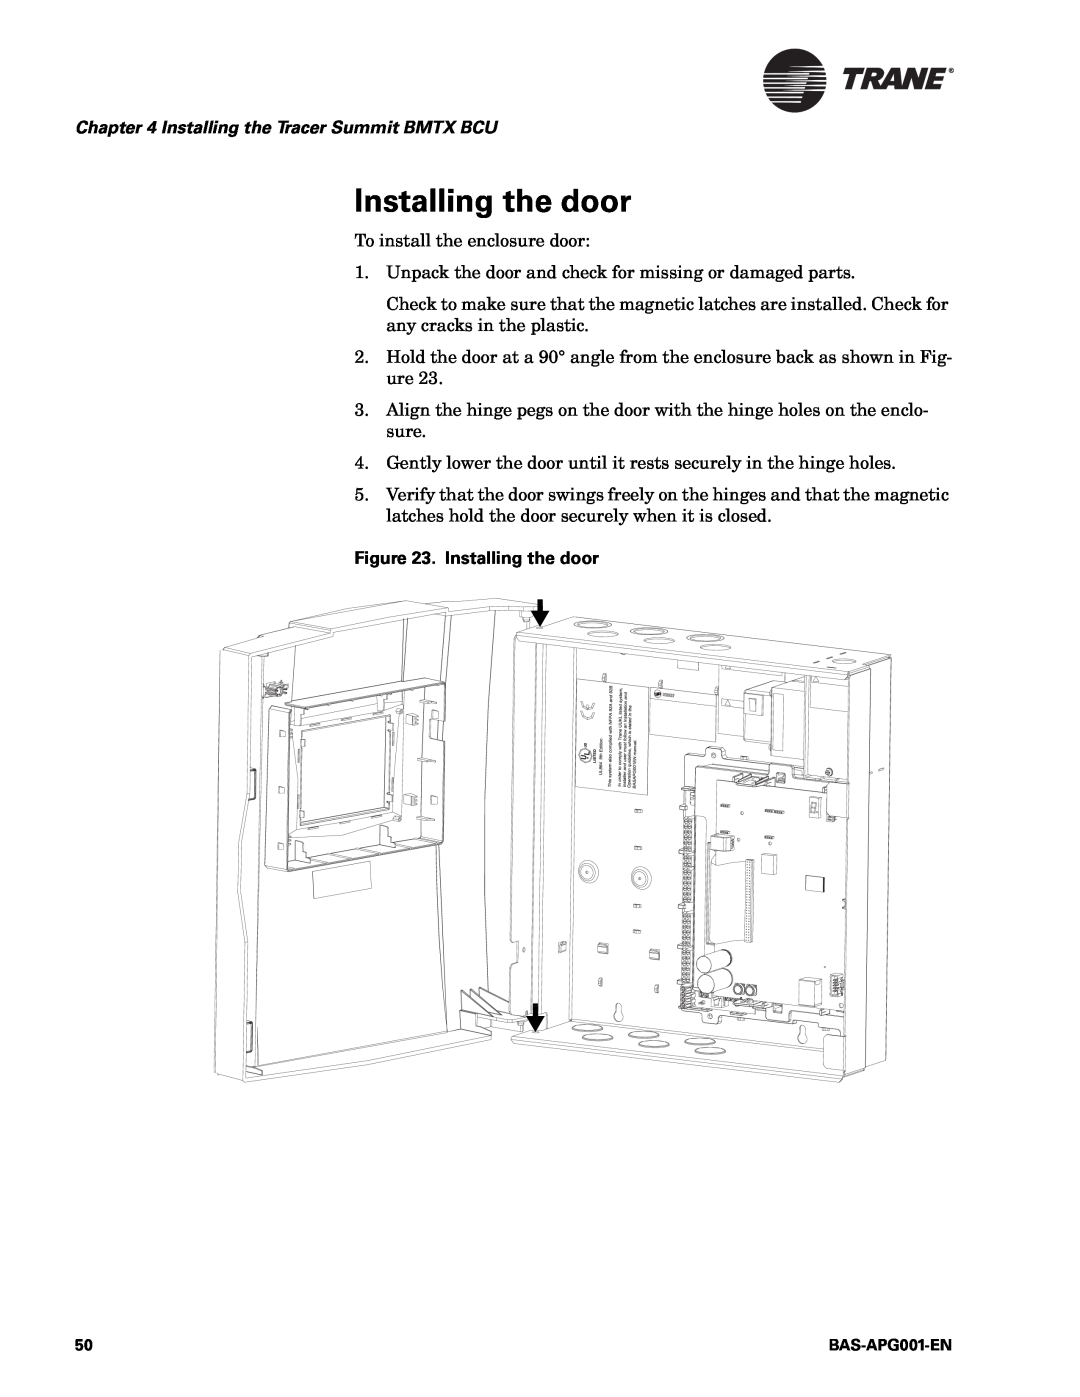 Trane BAS-APG001-EN manual Installing the door, Installing the Tracer Summit BMTX BCU 